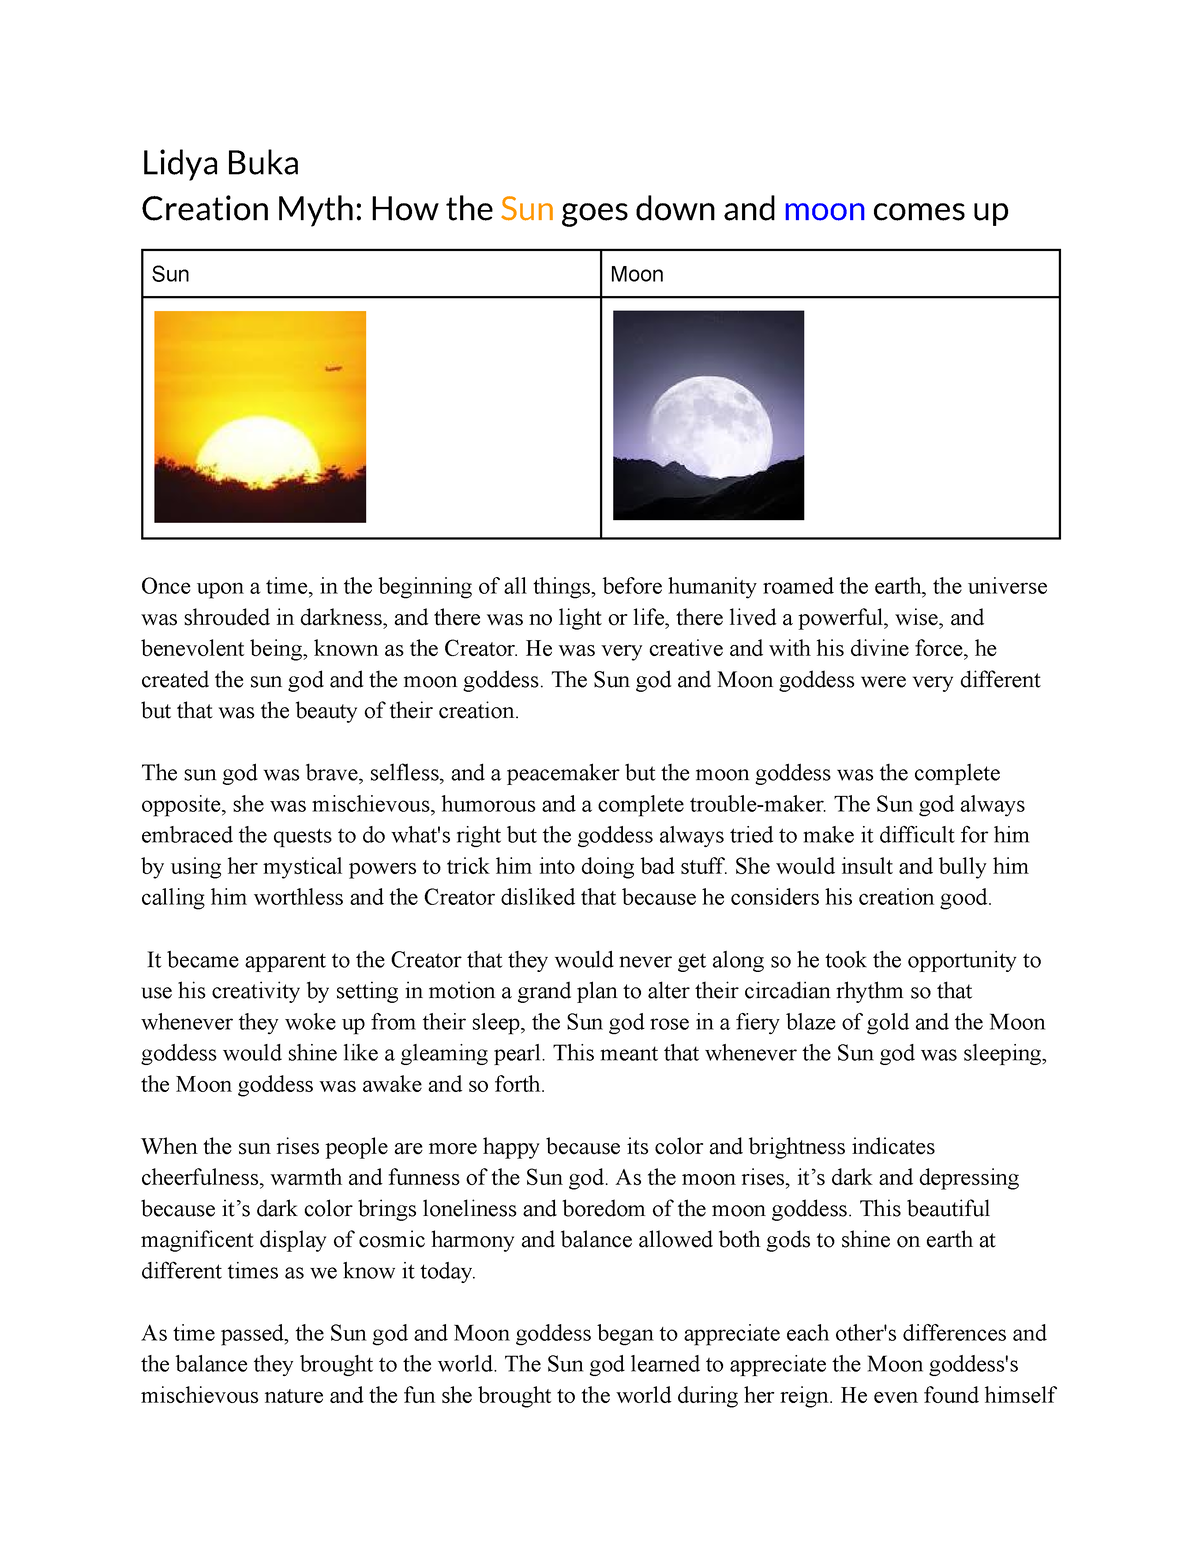 creation myth essay